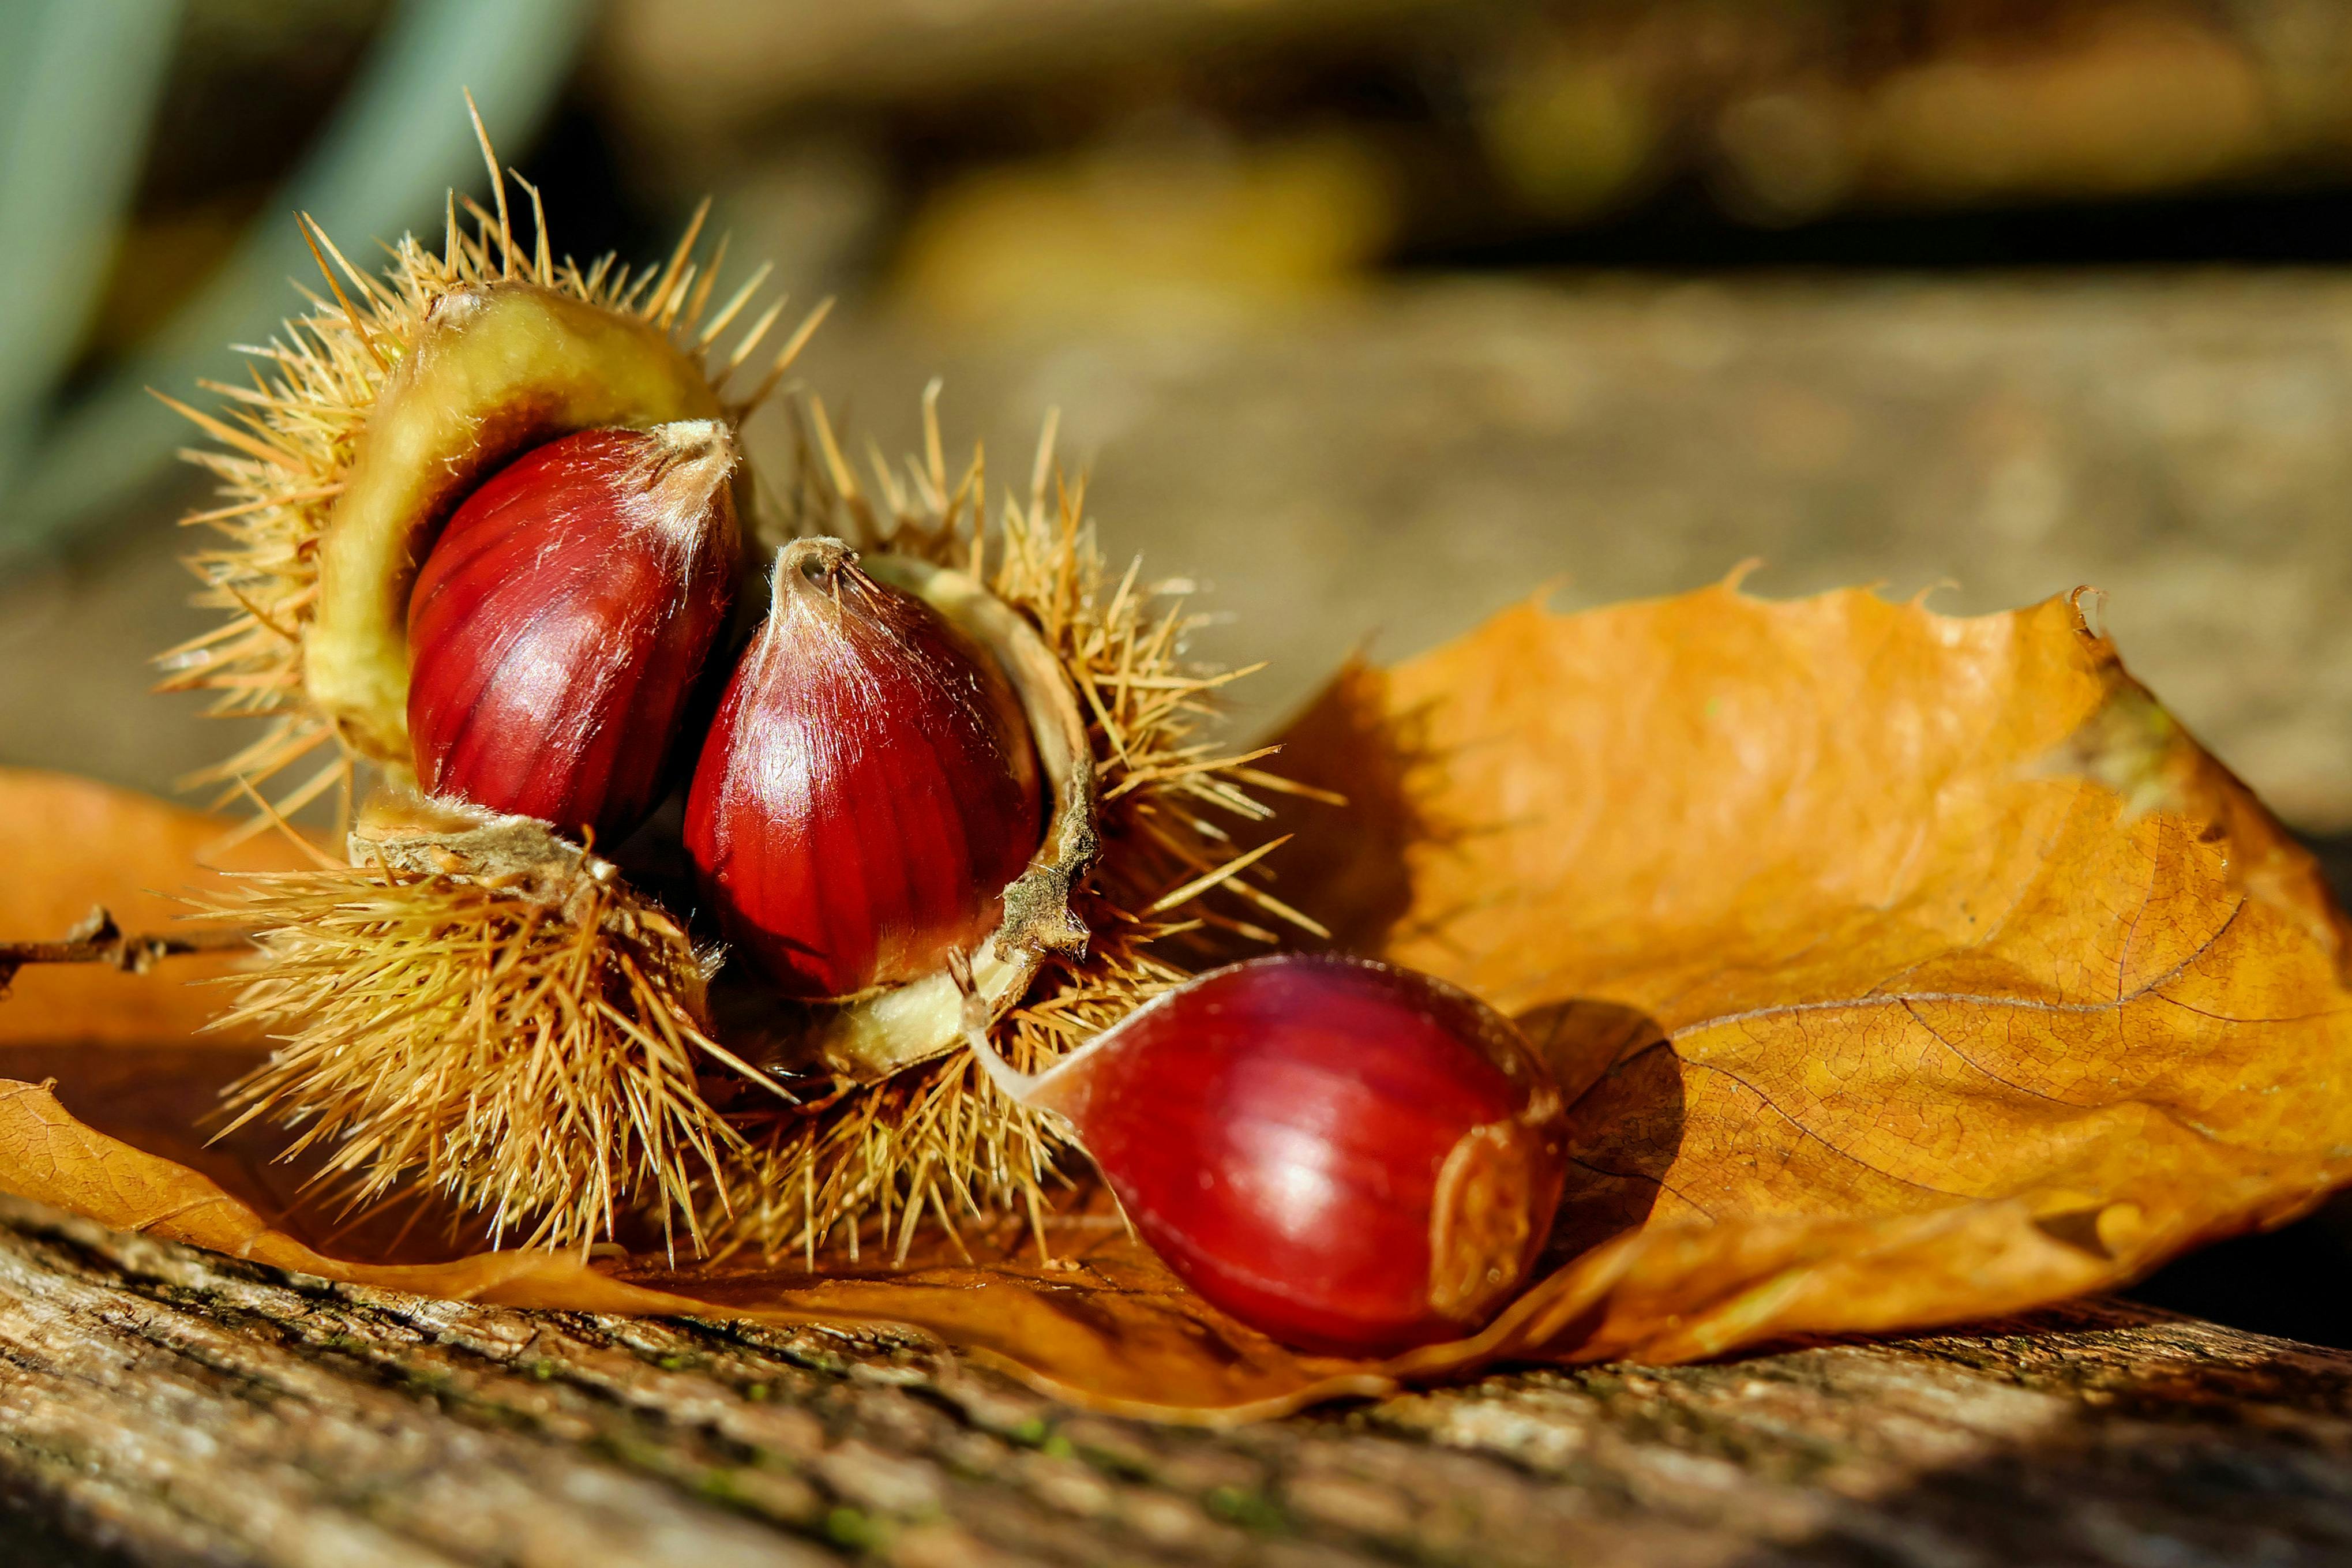 blurred background chestnuts close up color